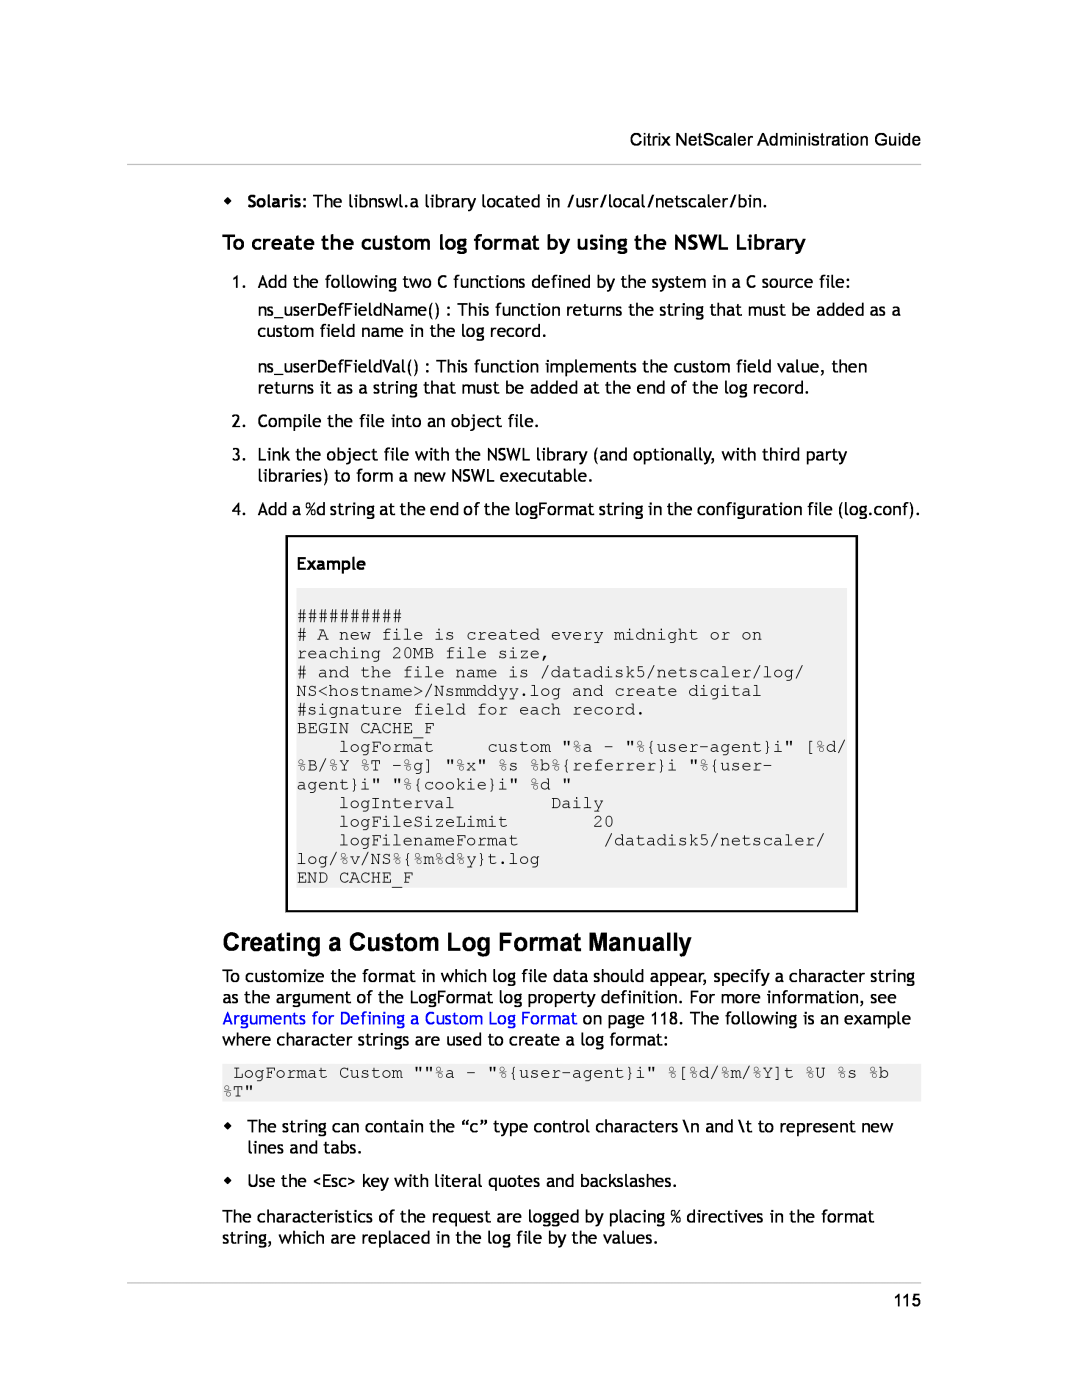 Citrix Systems CITRIX NETSCALER 9.3 manual Creating a Custom Log Format Manually, Example 